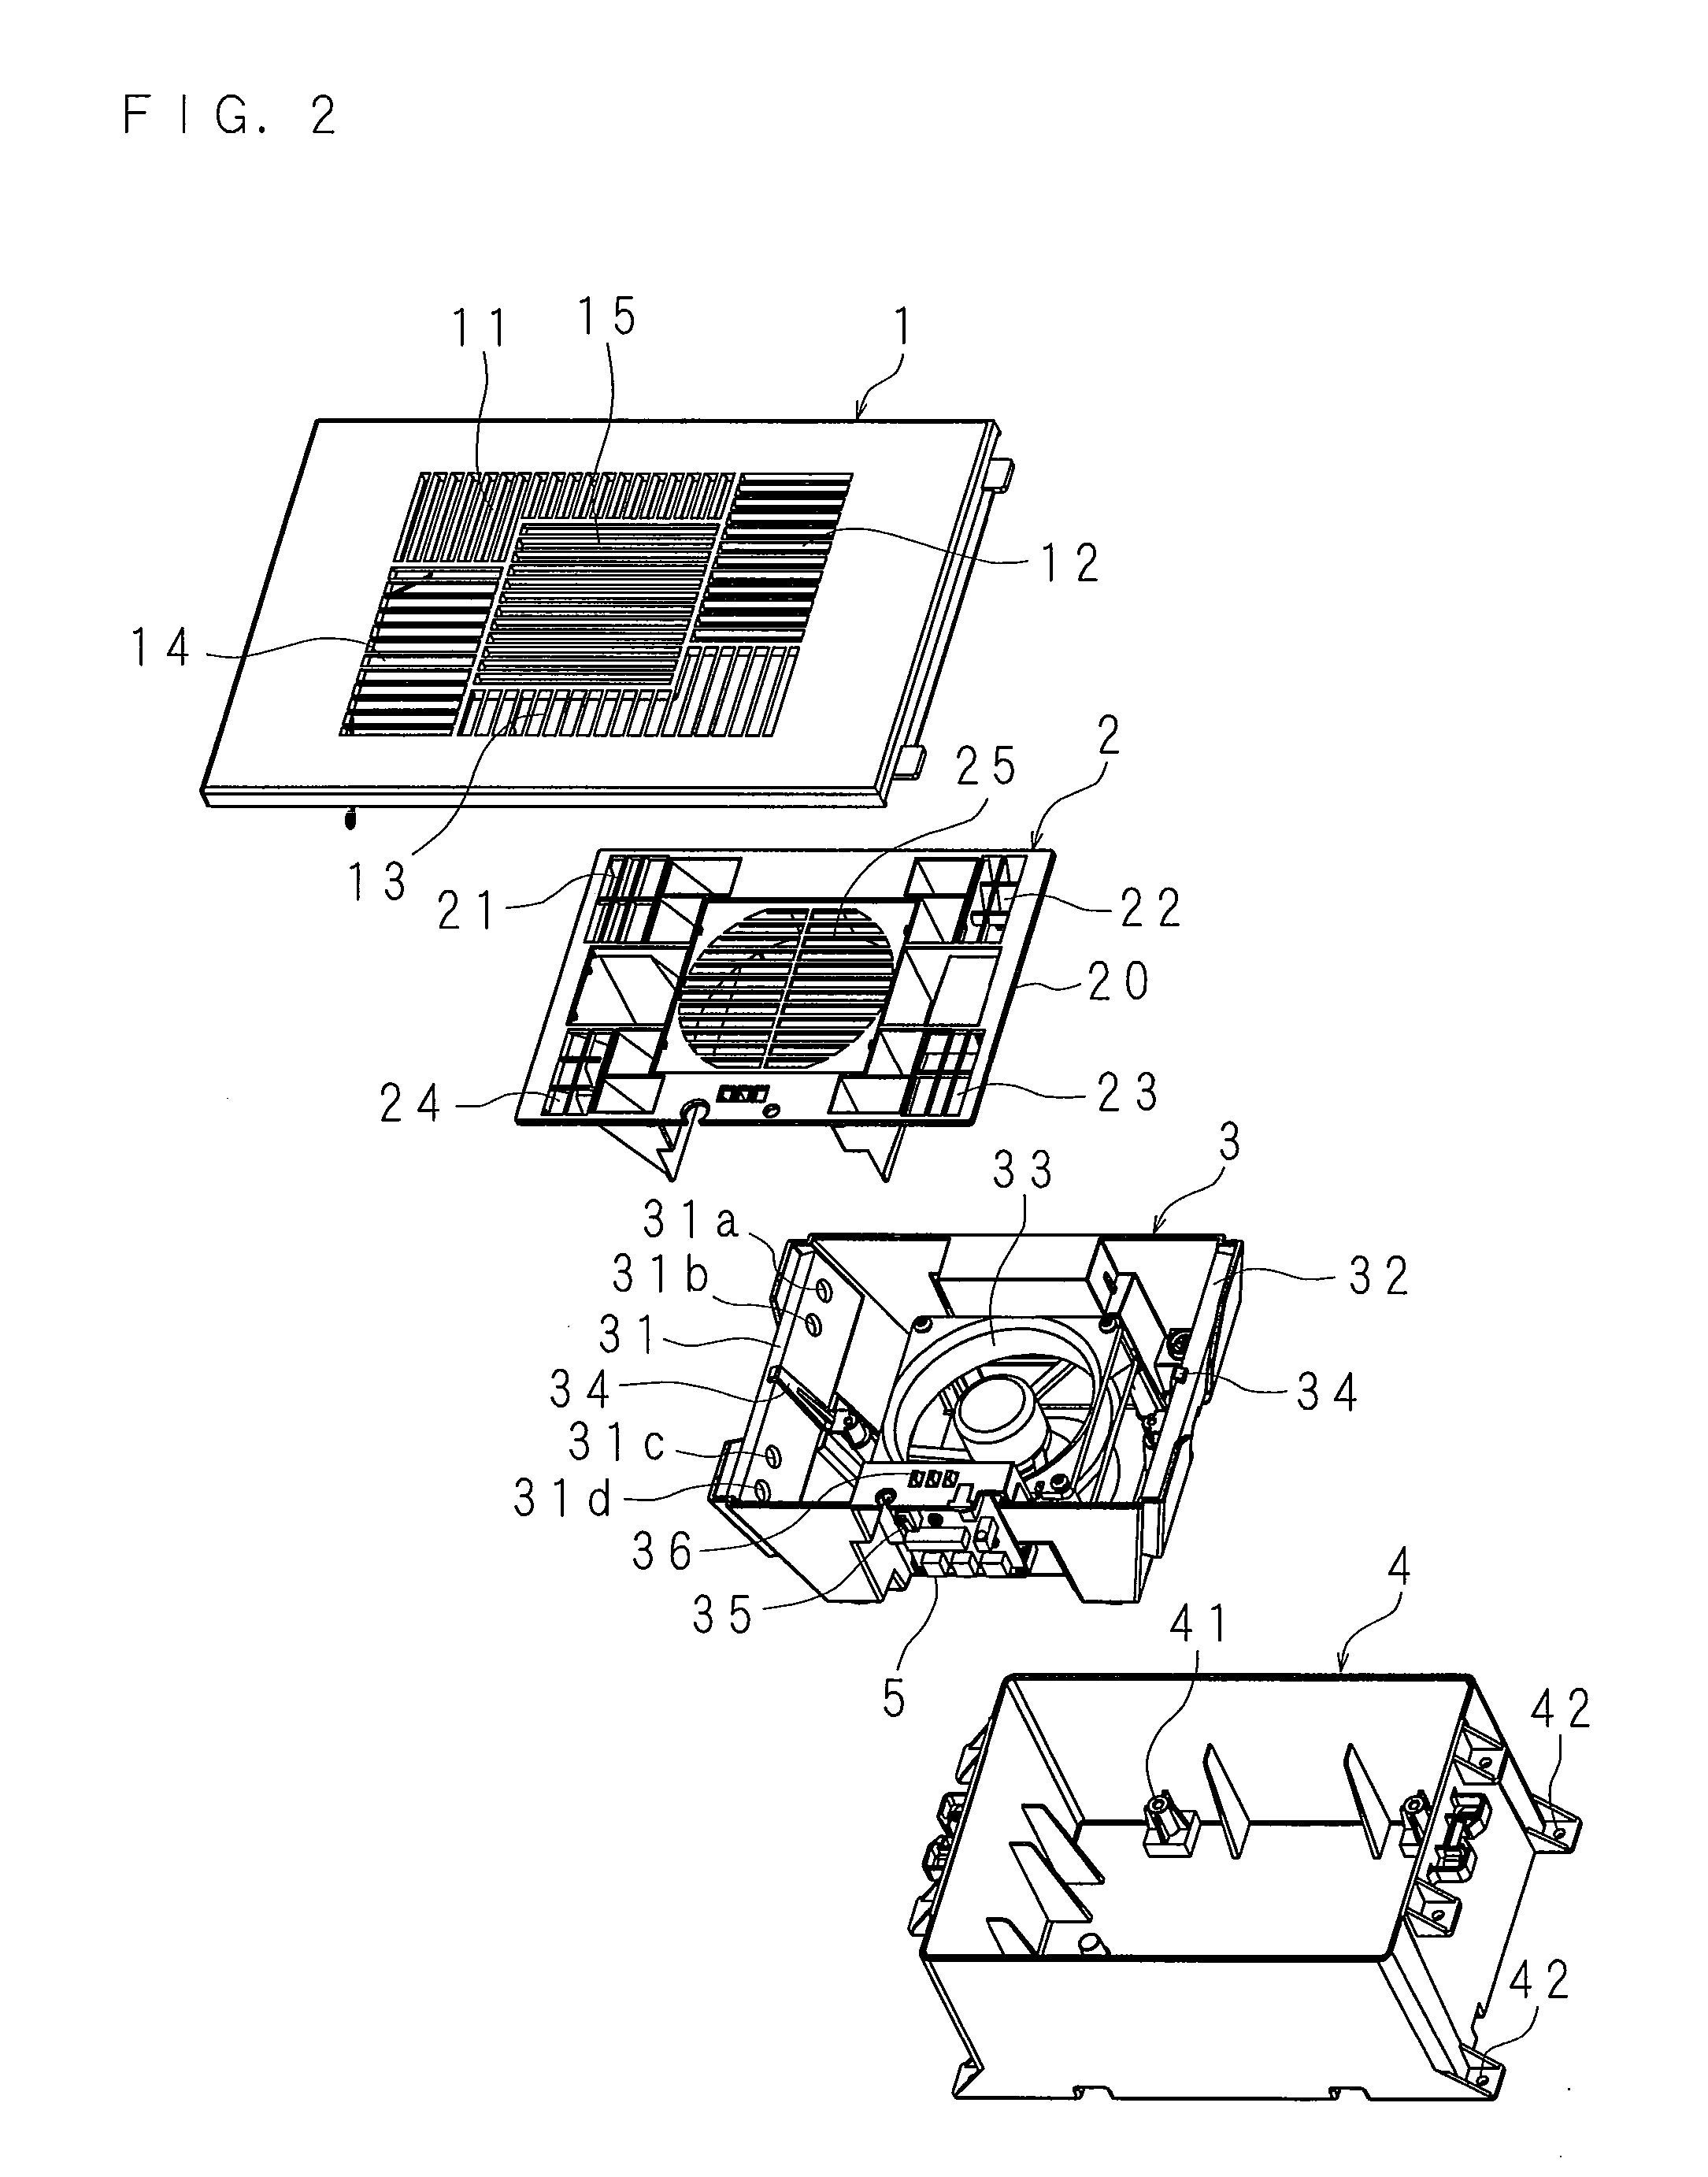 Ion generating unit and lighting apparatus